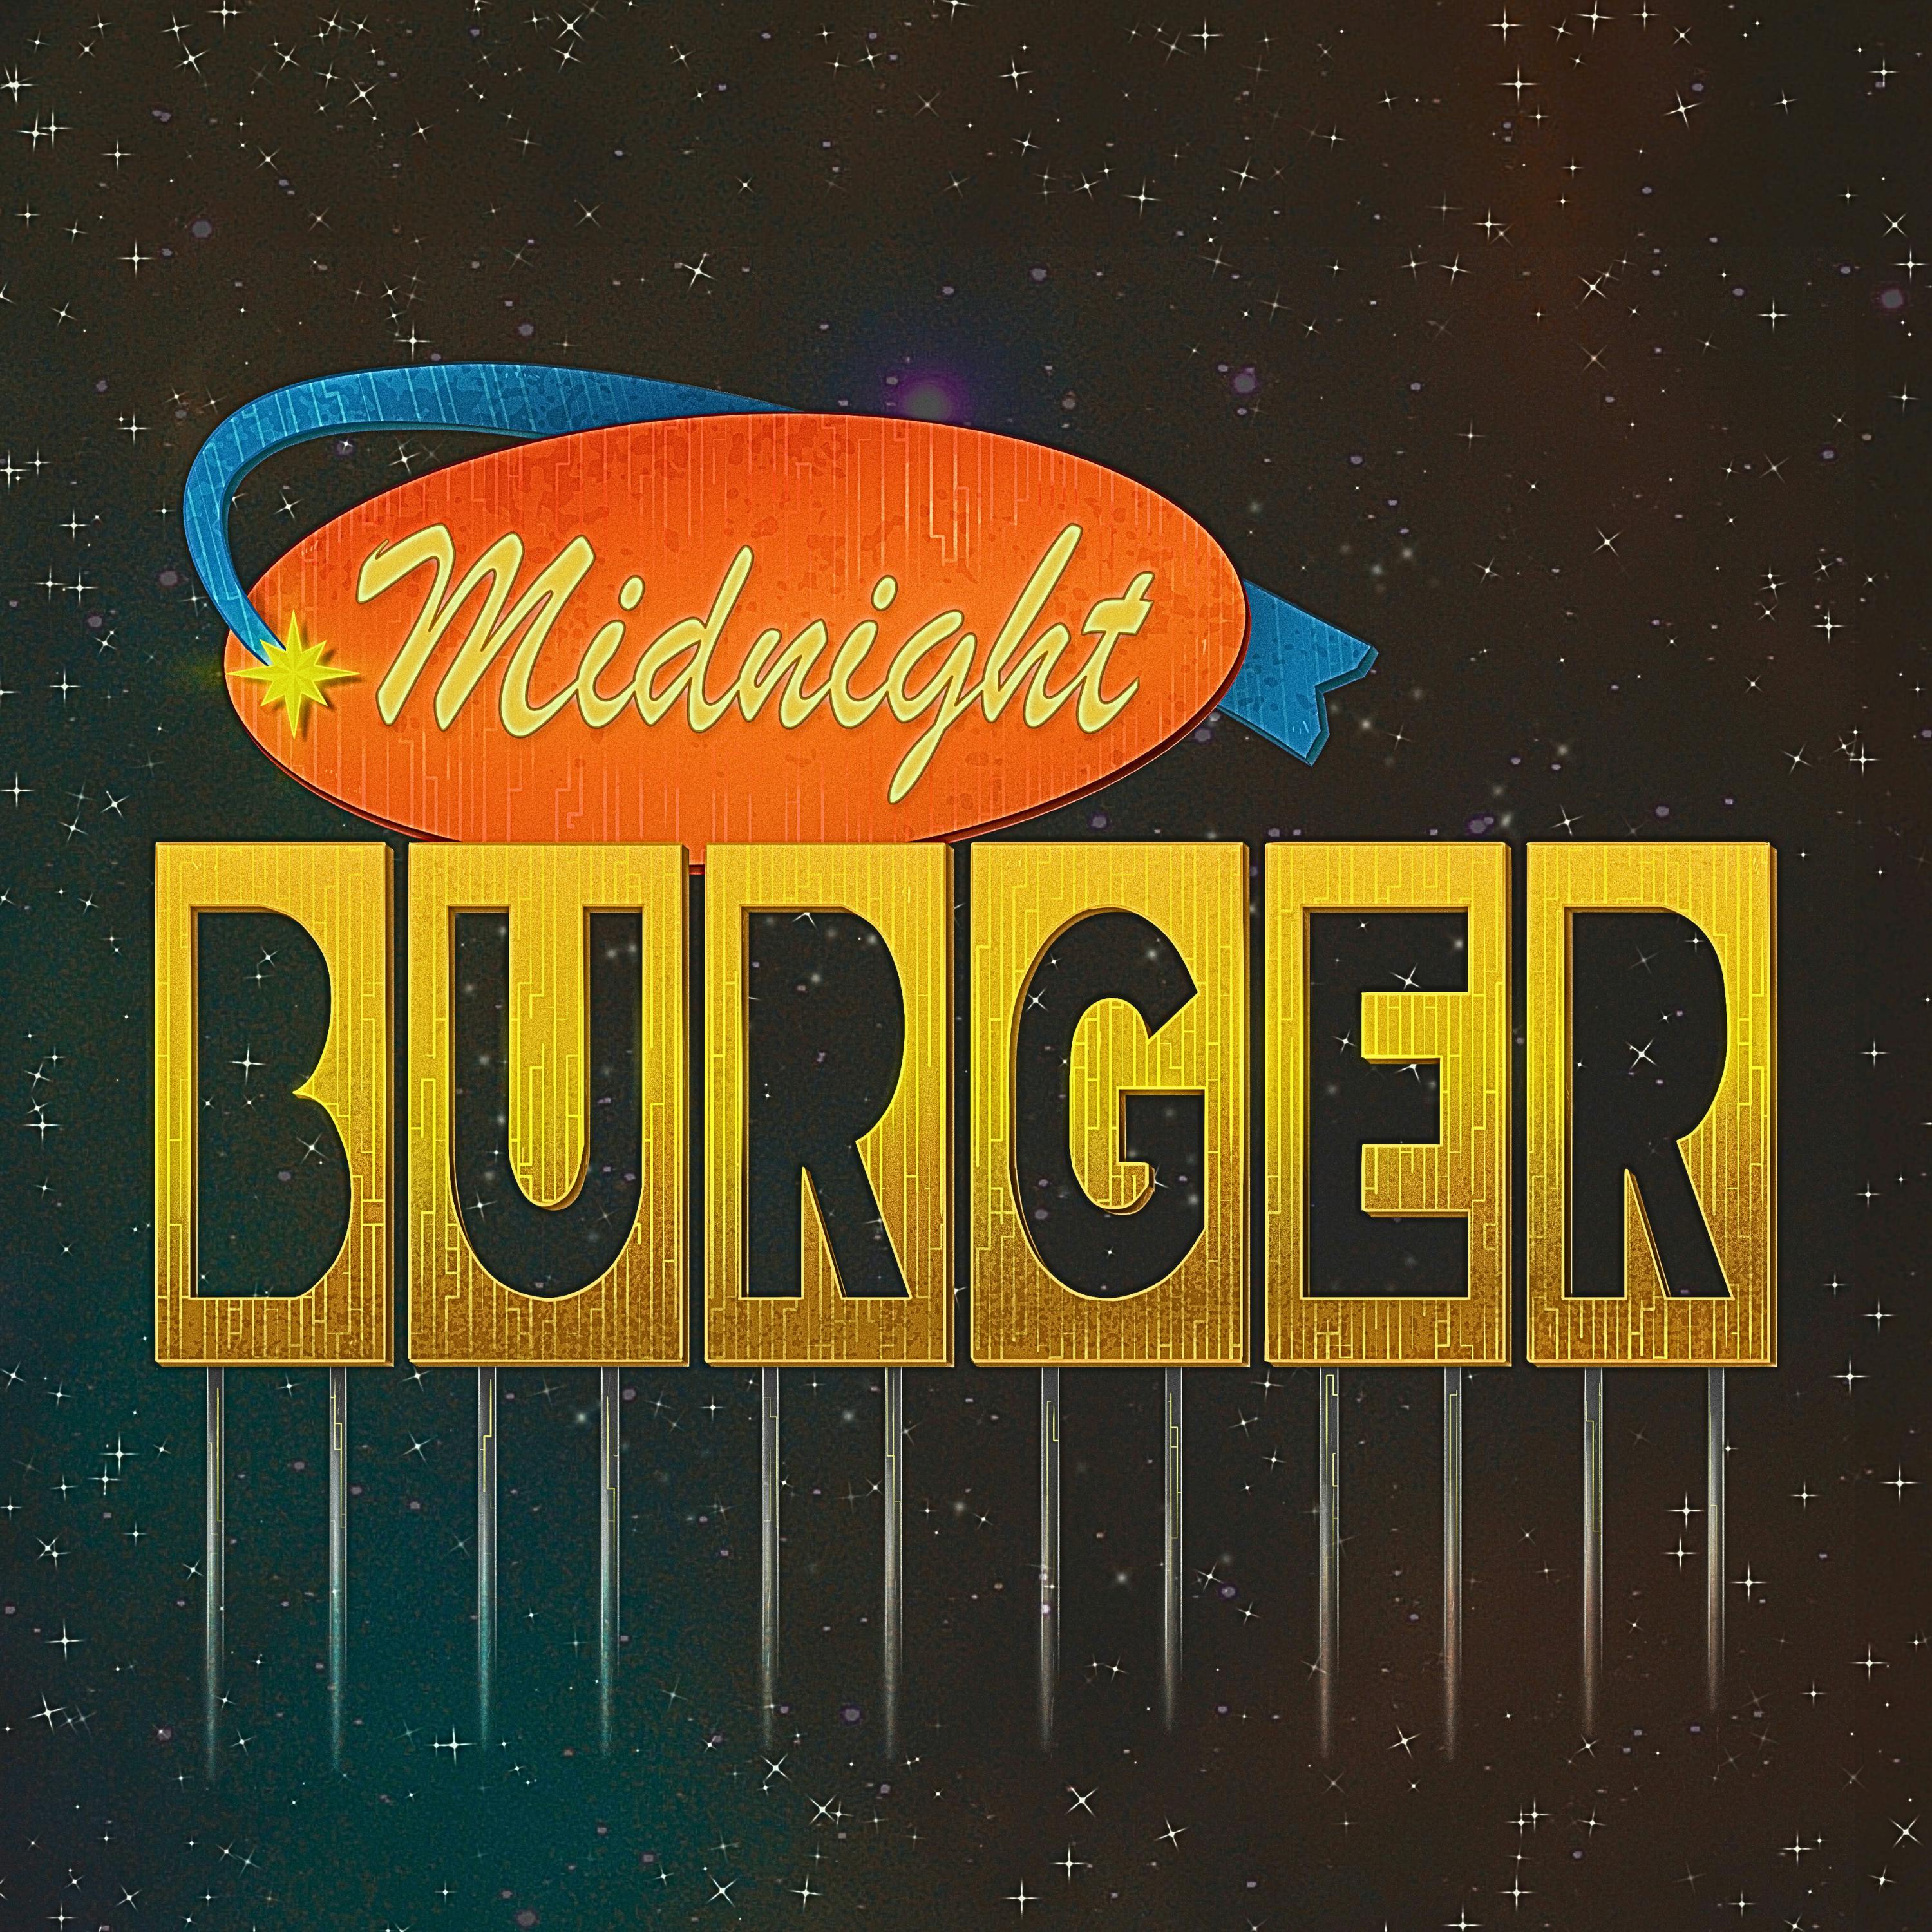 Midnight Burger podcast show image